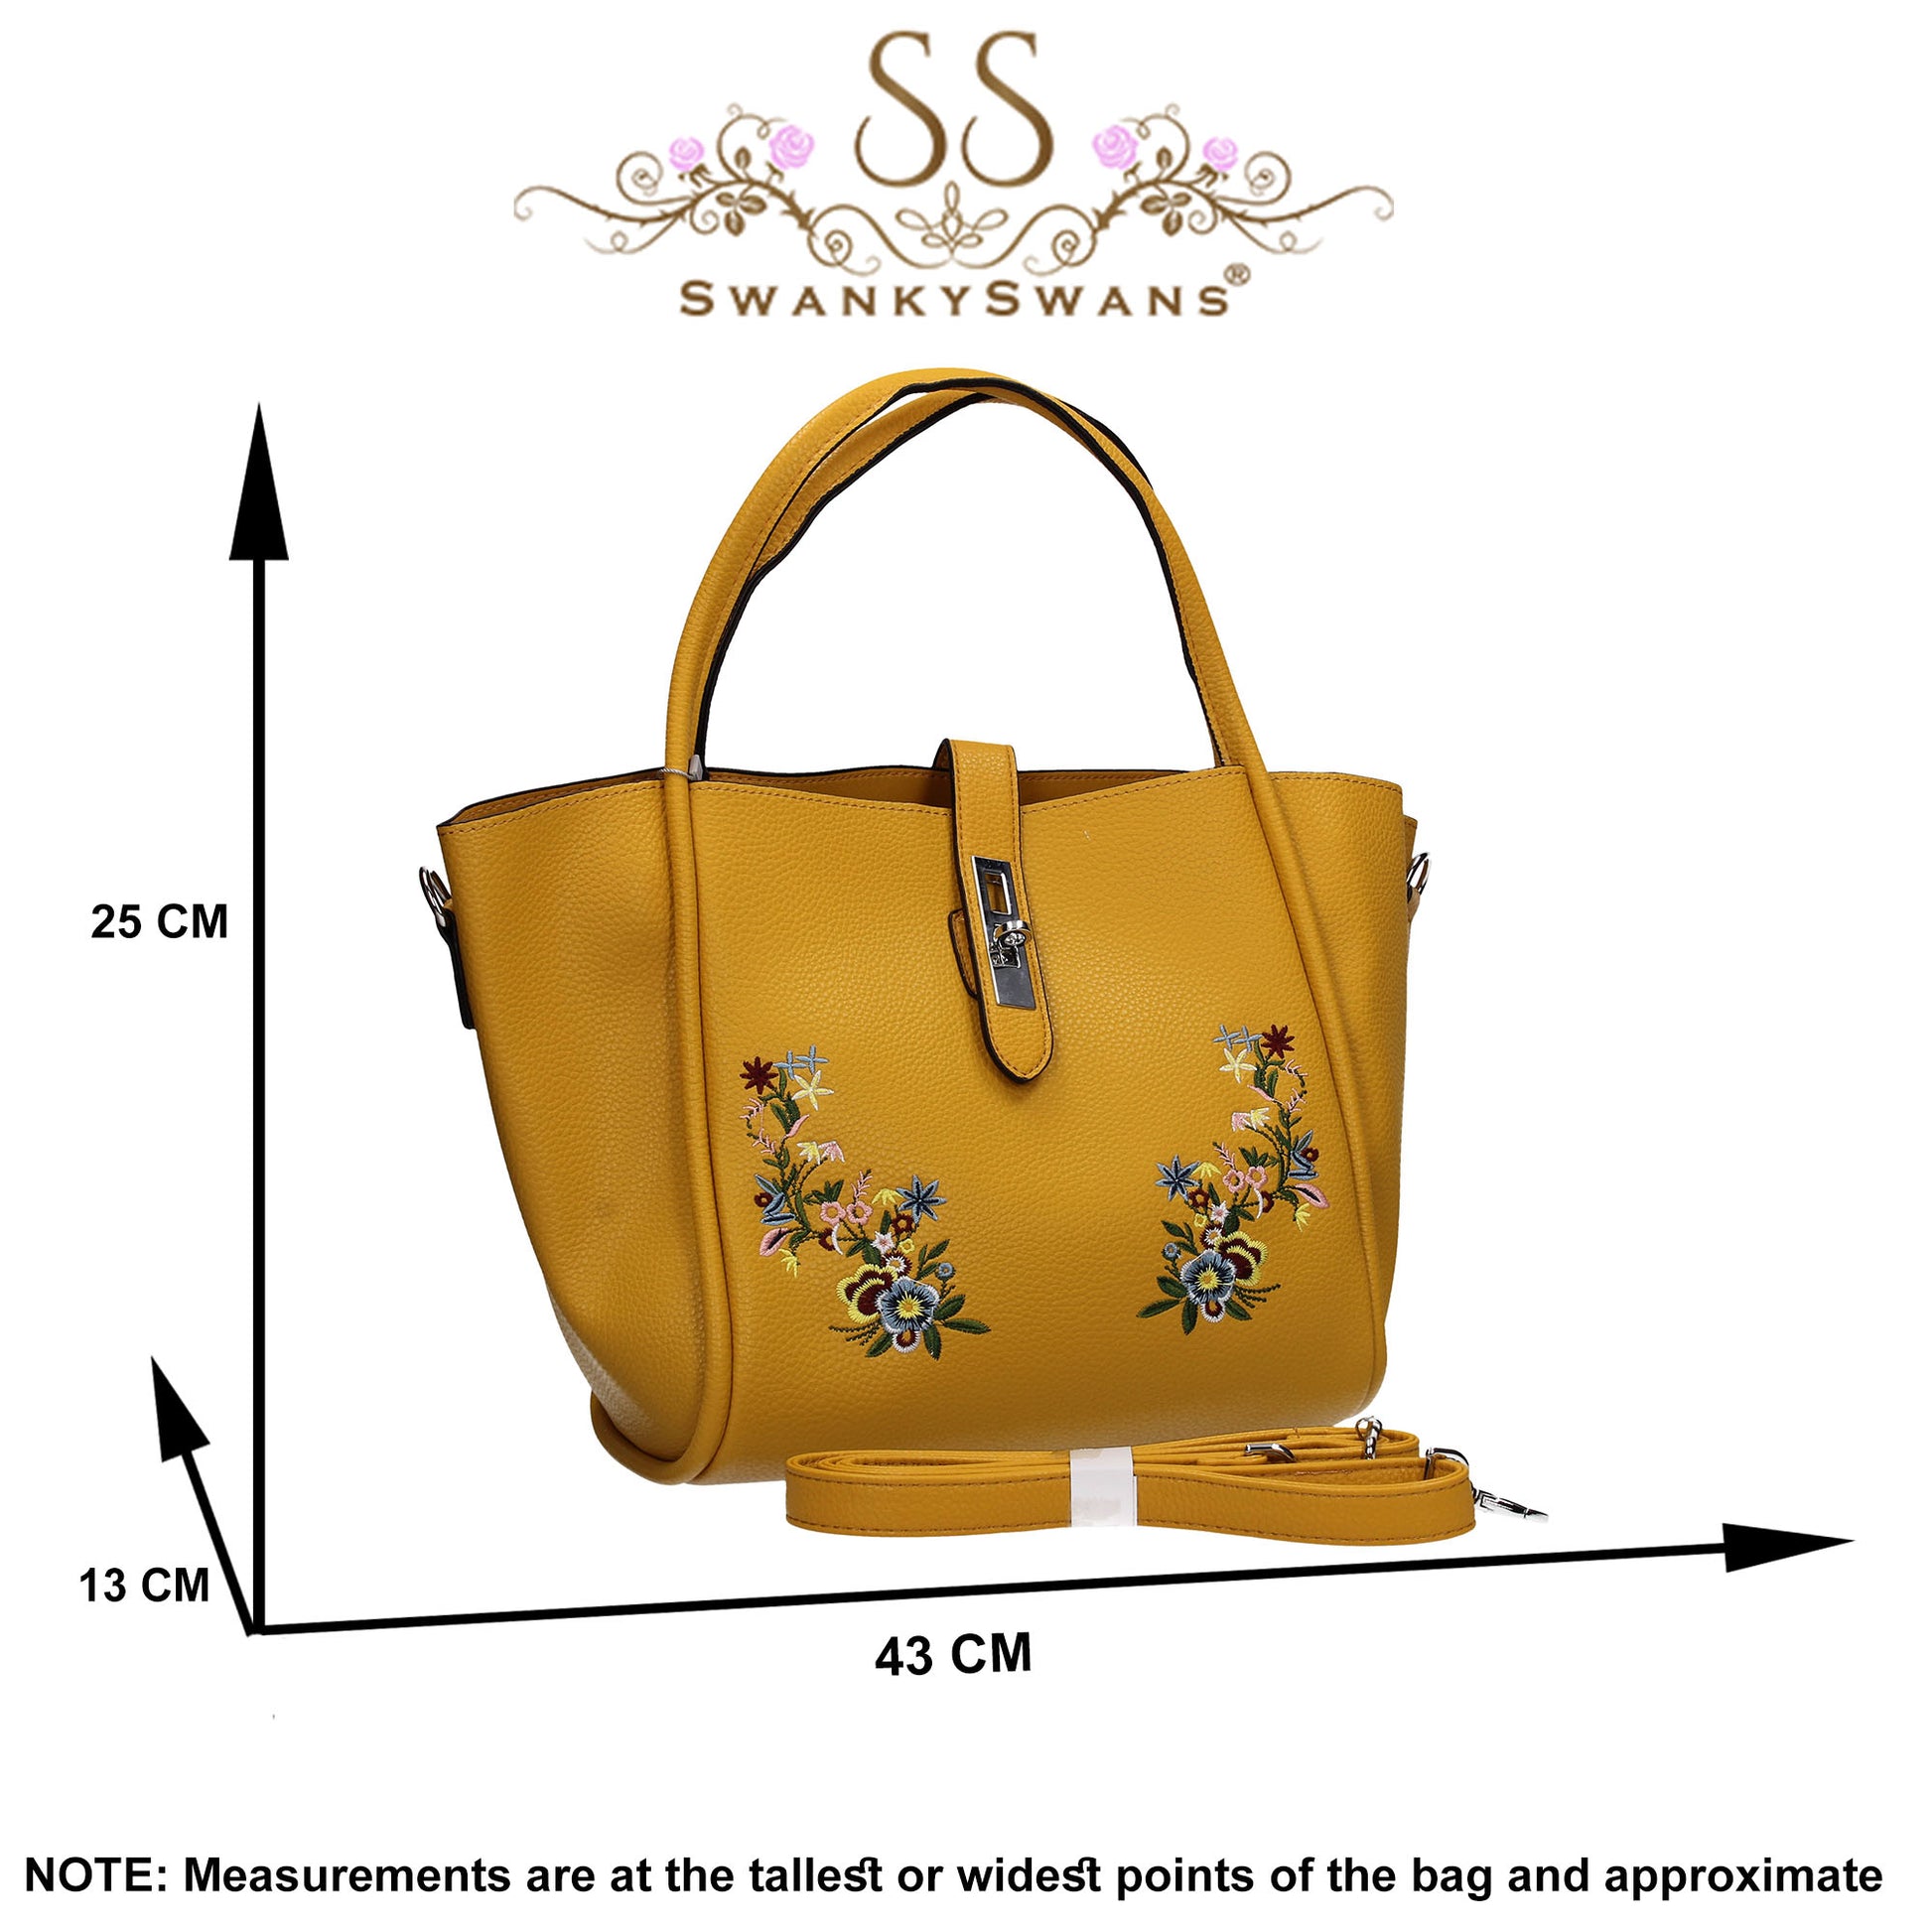 Rosie Summer Tote Handbag Primrose YellowBeautiful Cute Animal Faux Leather Clutch Bag Handles Strap Summer School